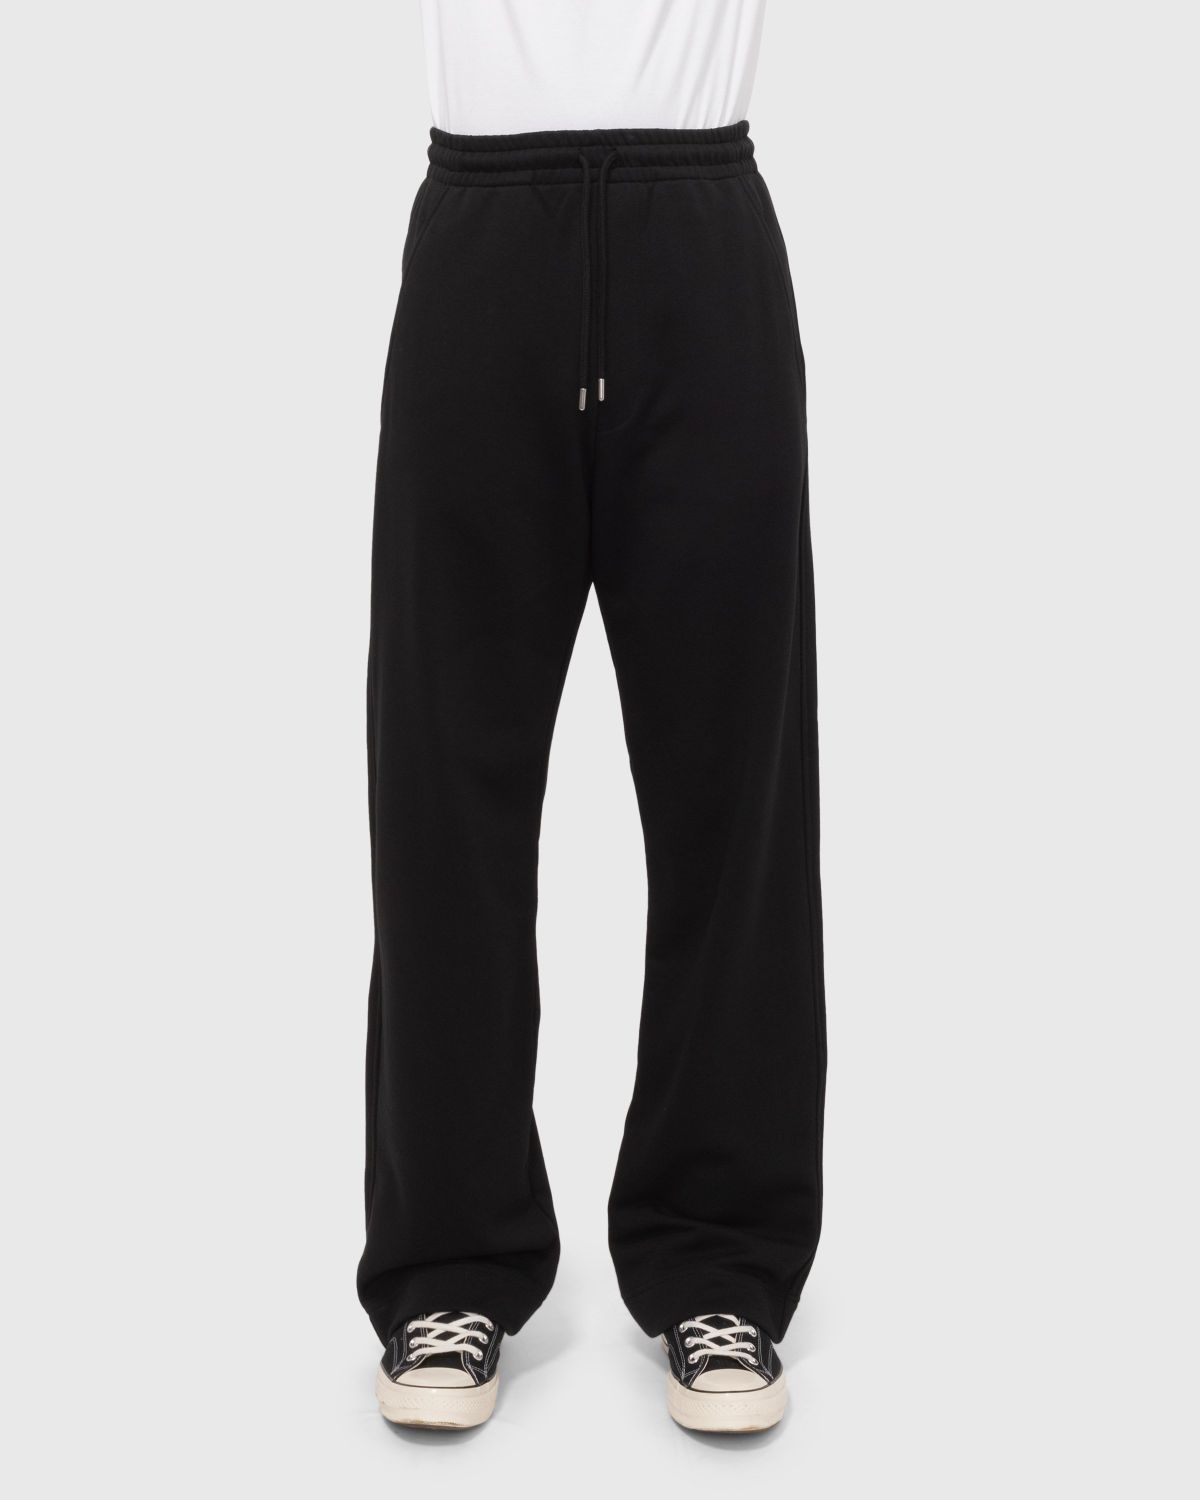 Dries van Noten – Hamer Sweatpants Black - Pants - Black - Image 2